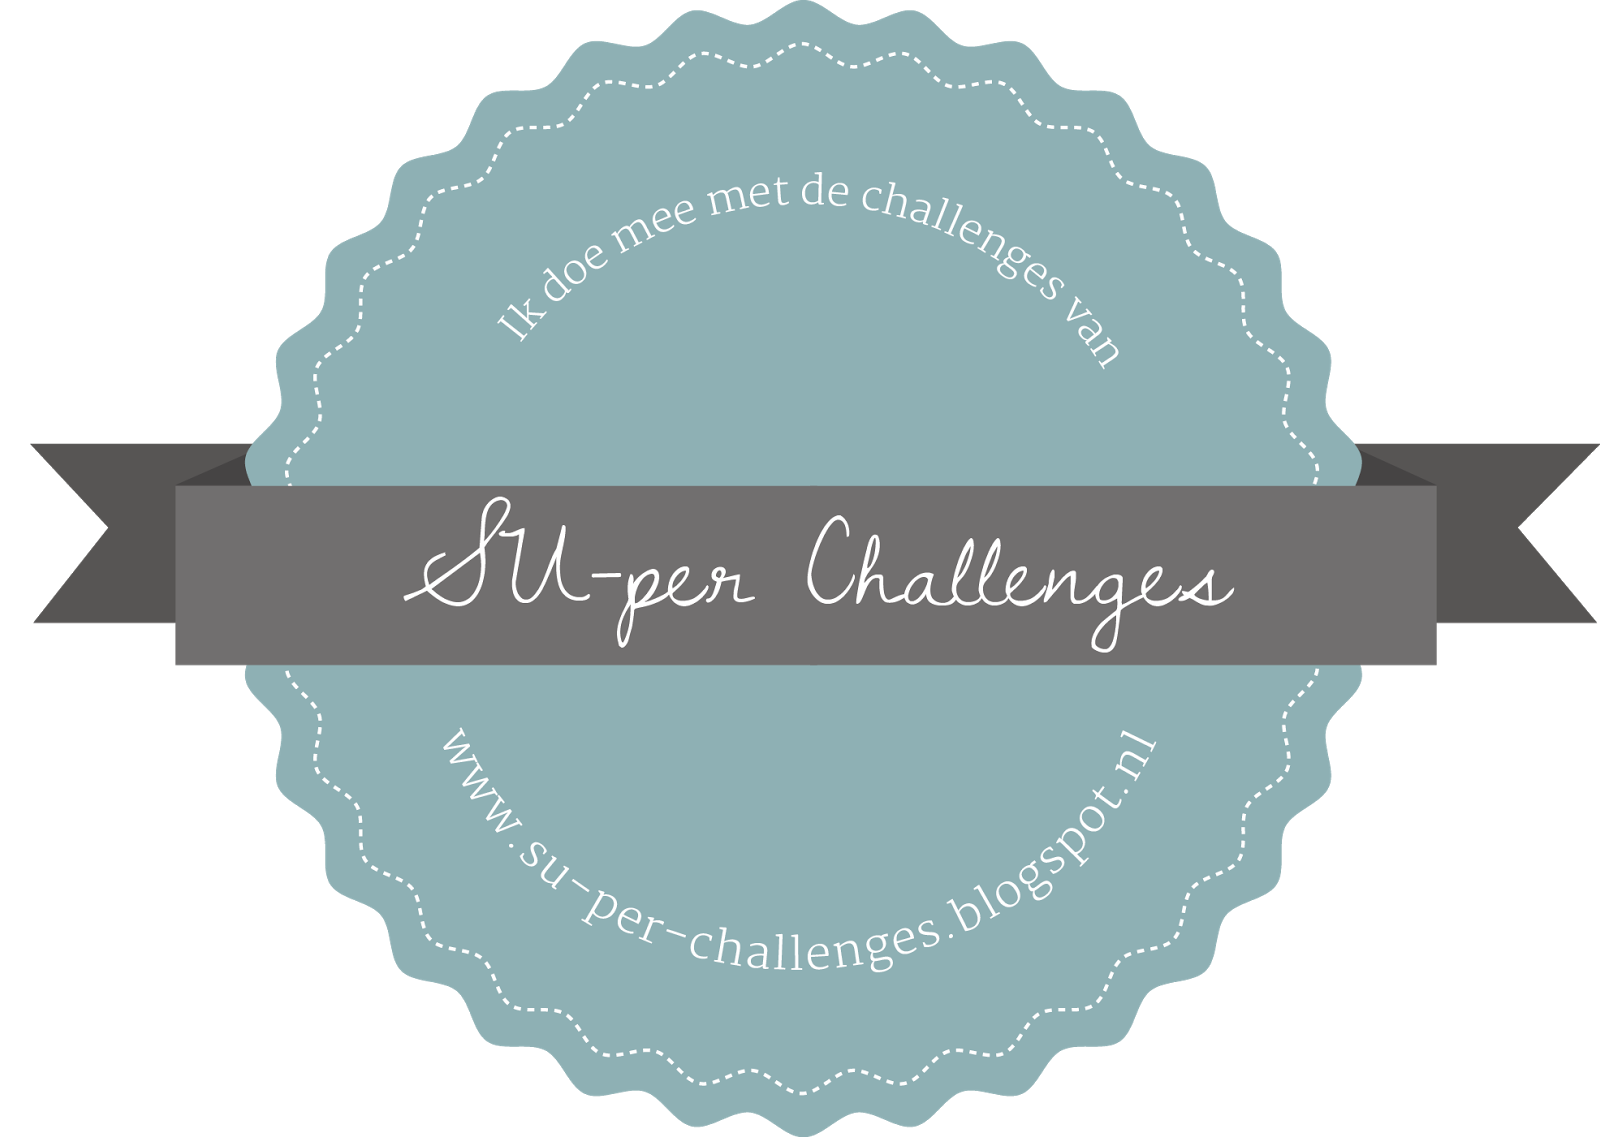 SU-per challenges